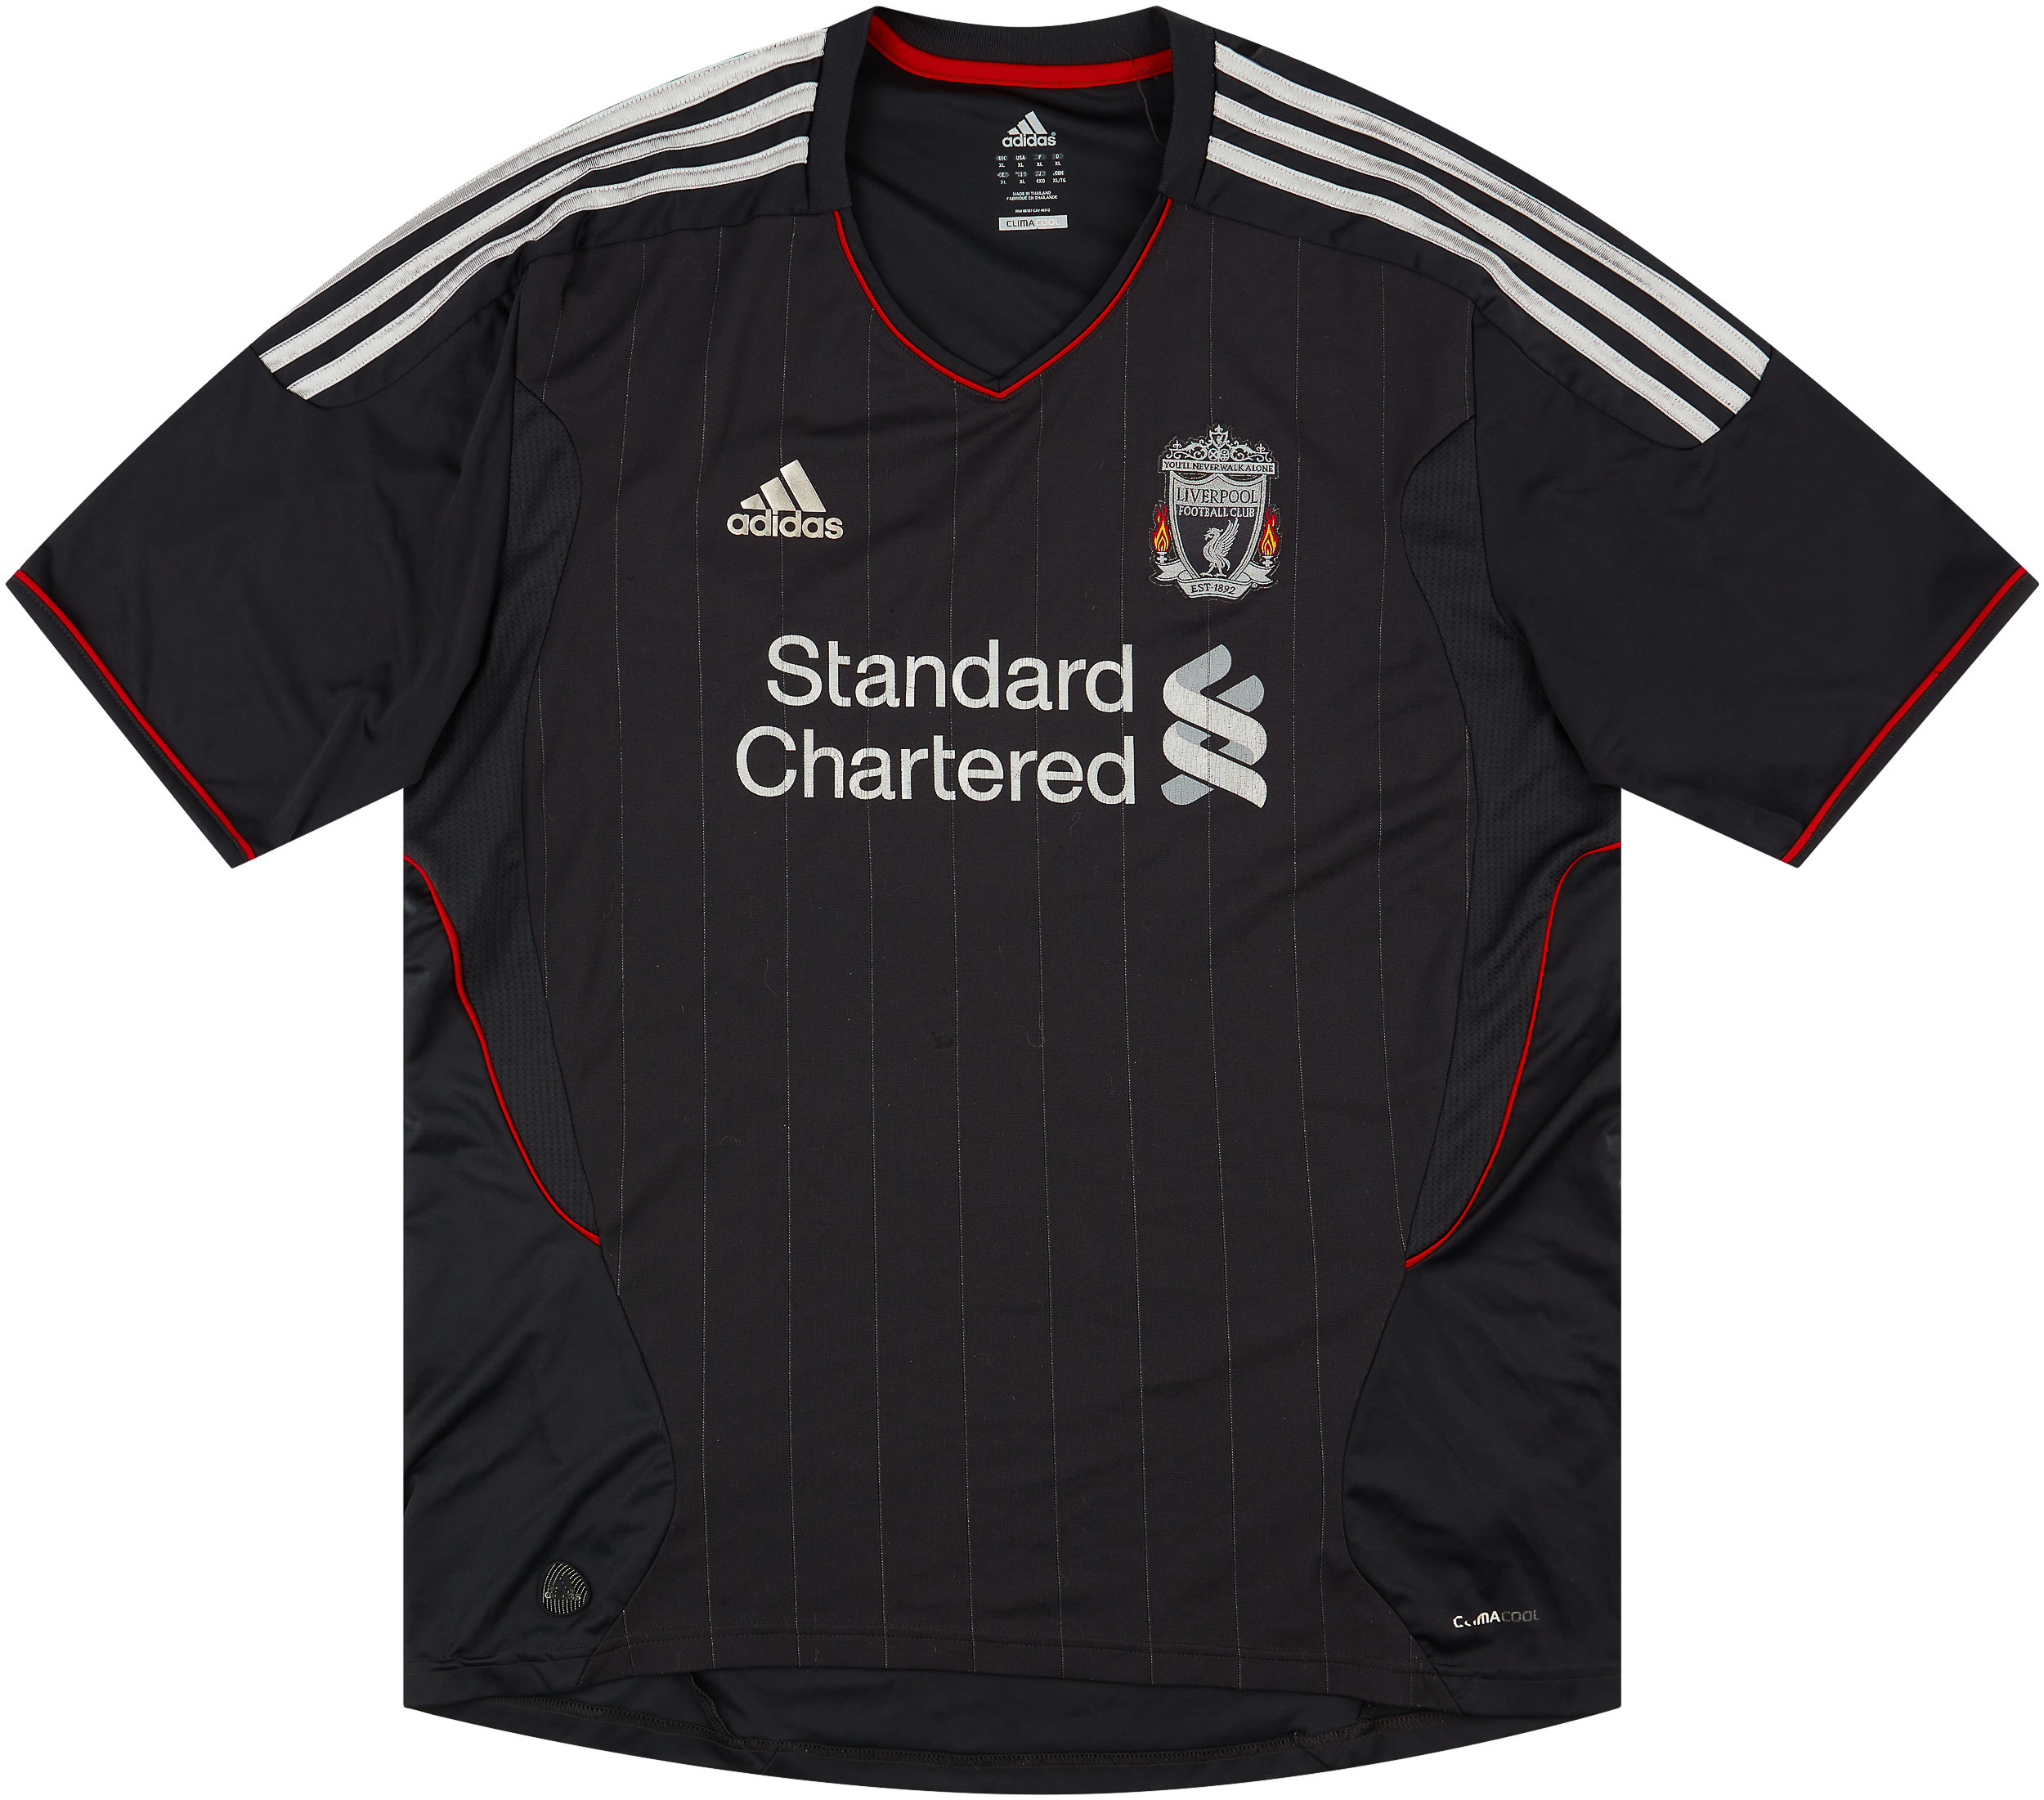 2011-12 Liverpool Away Shirt - 6/10 - ()